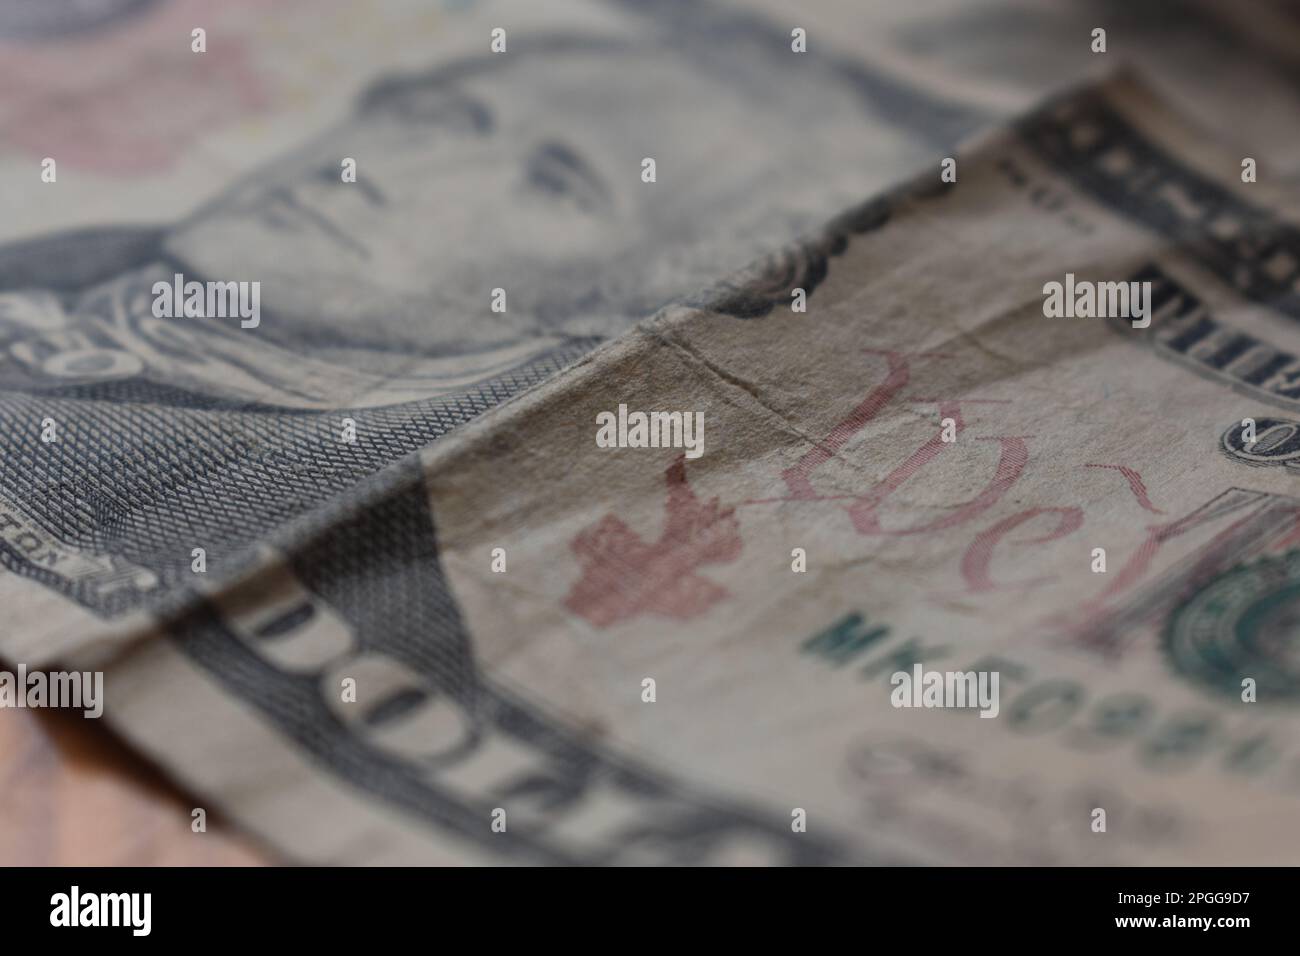 American 10 (ten) dollar bills lying on a table. Portrait of Alexander Hamilton.  United States, US, USA Stock Photo